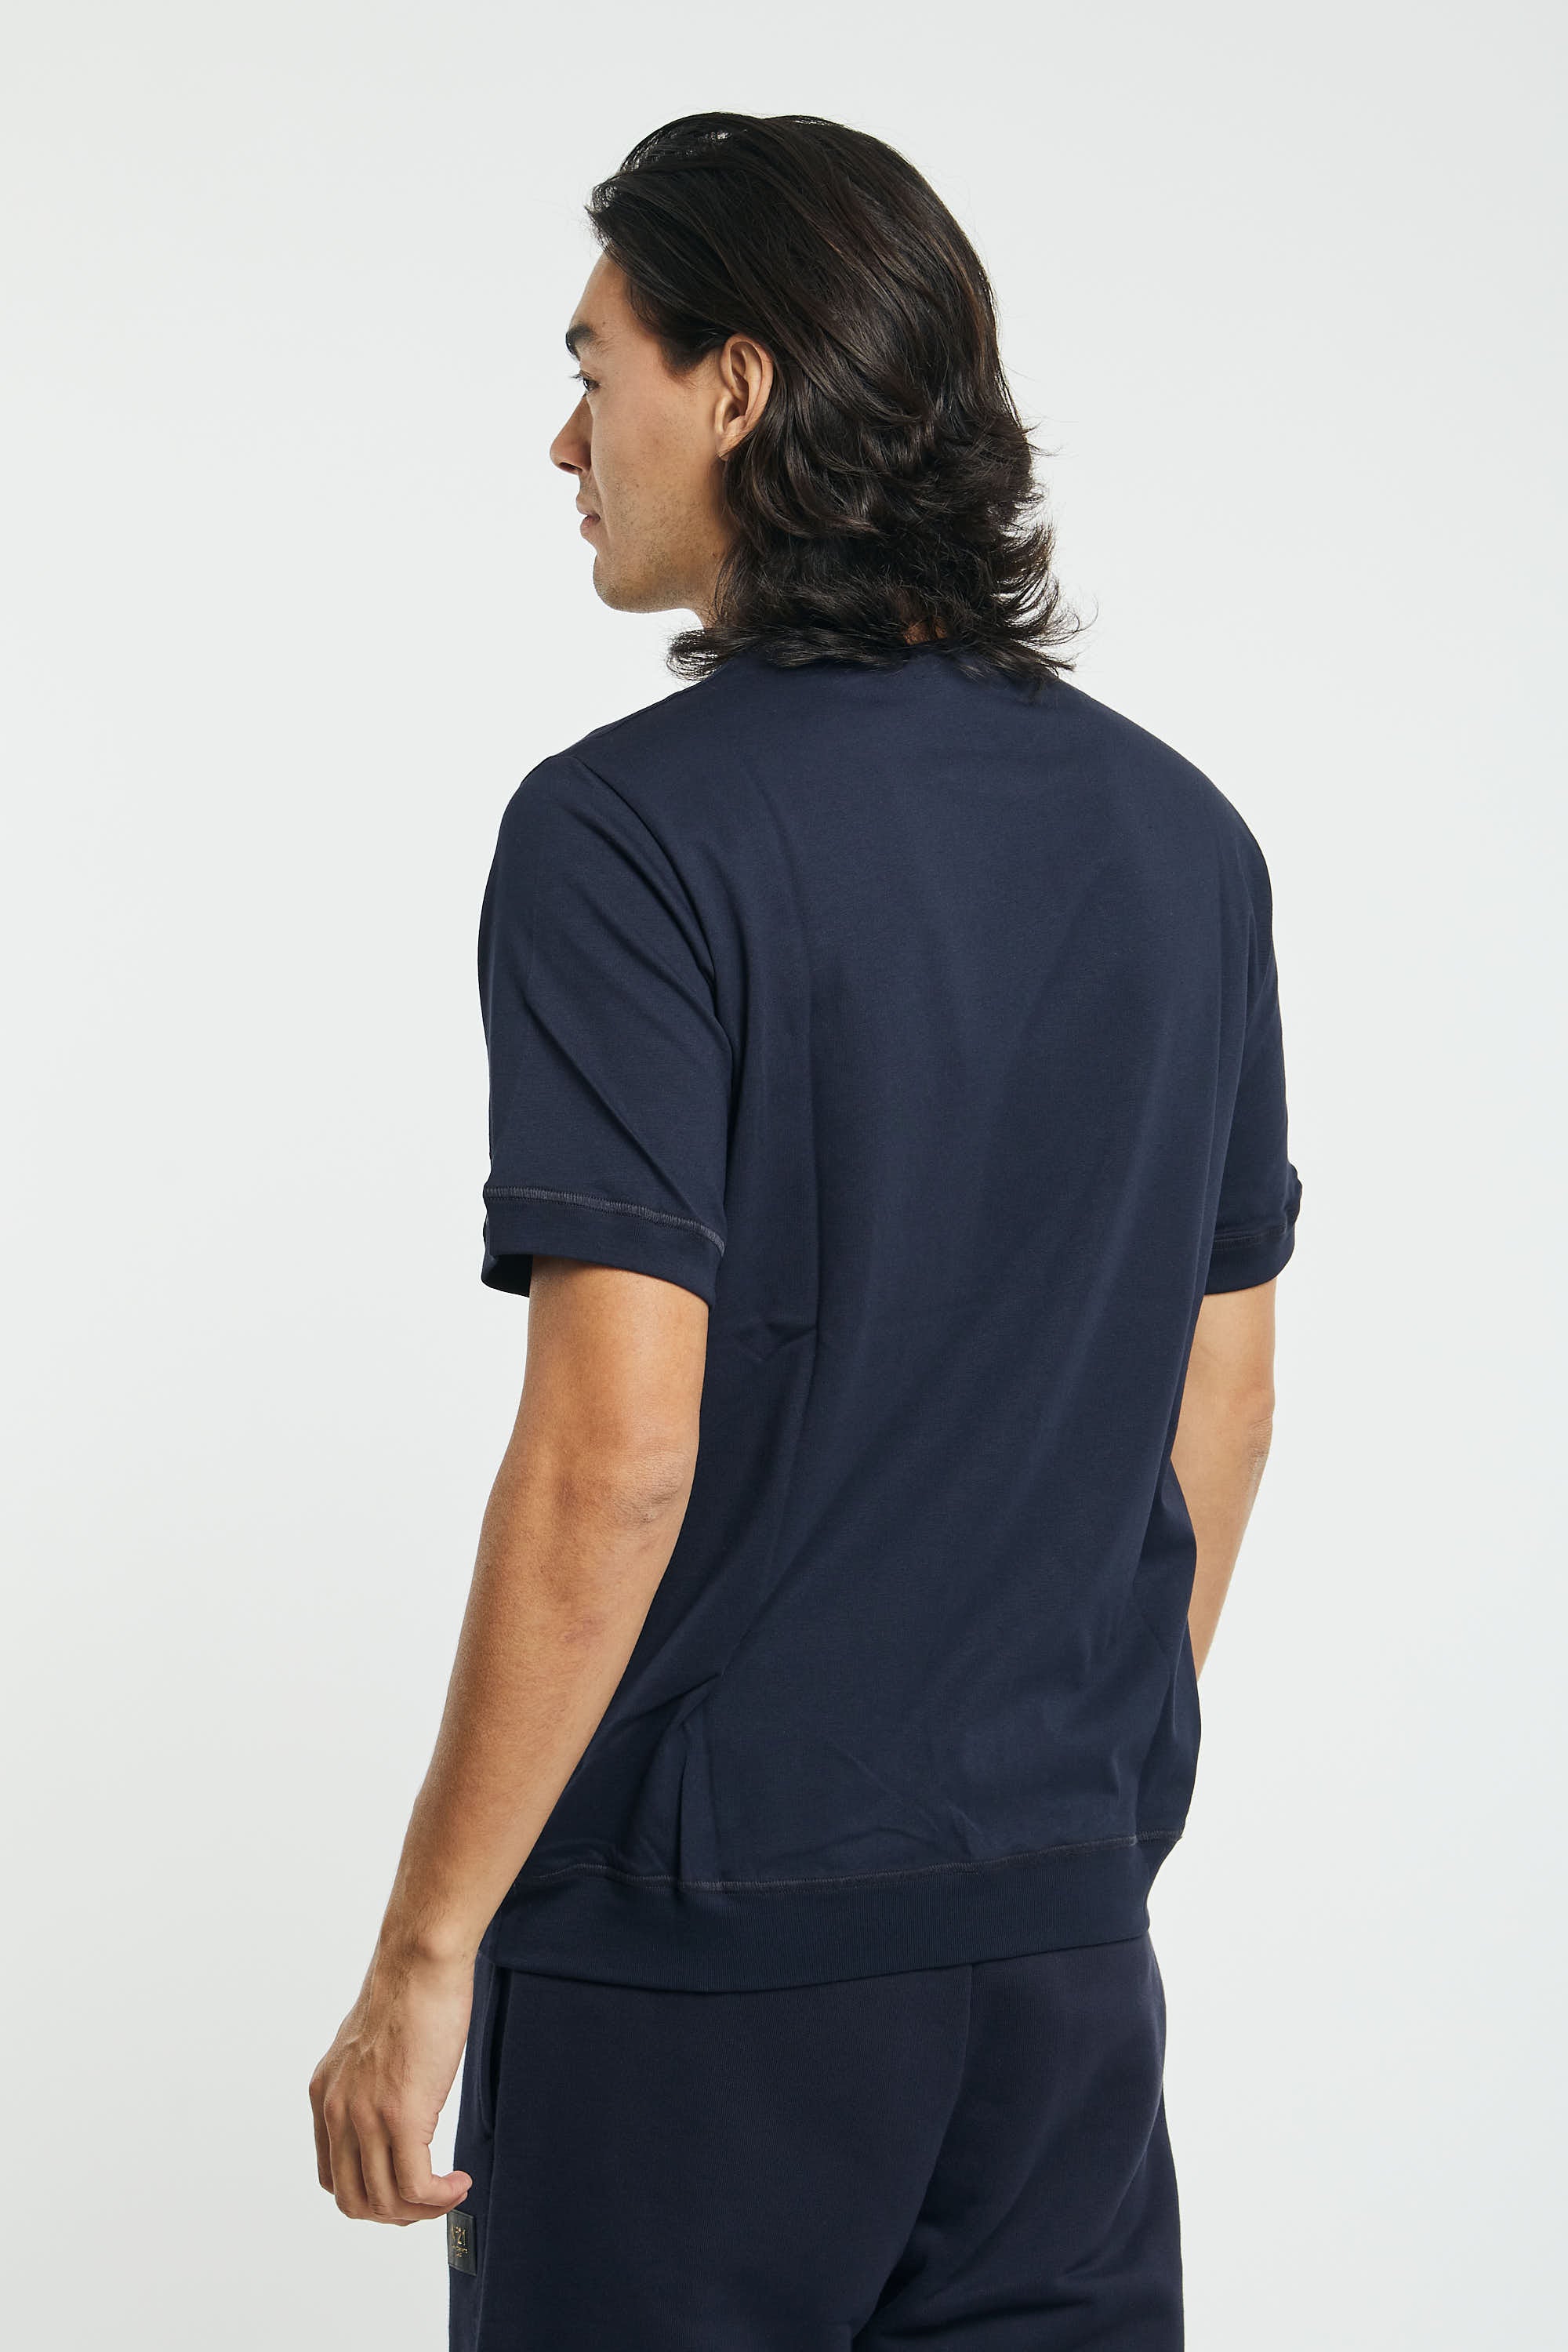 N°21 Cotton/Eco-leather Blue T-Shirt - 3